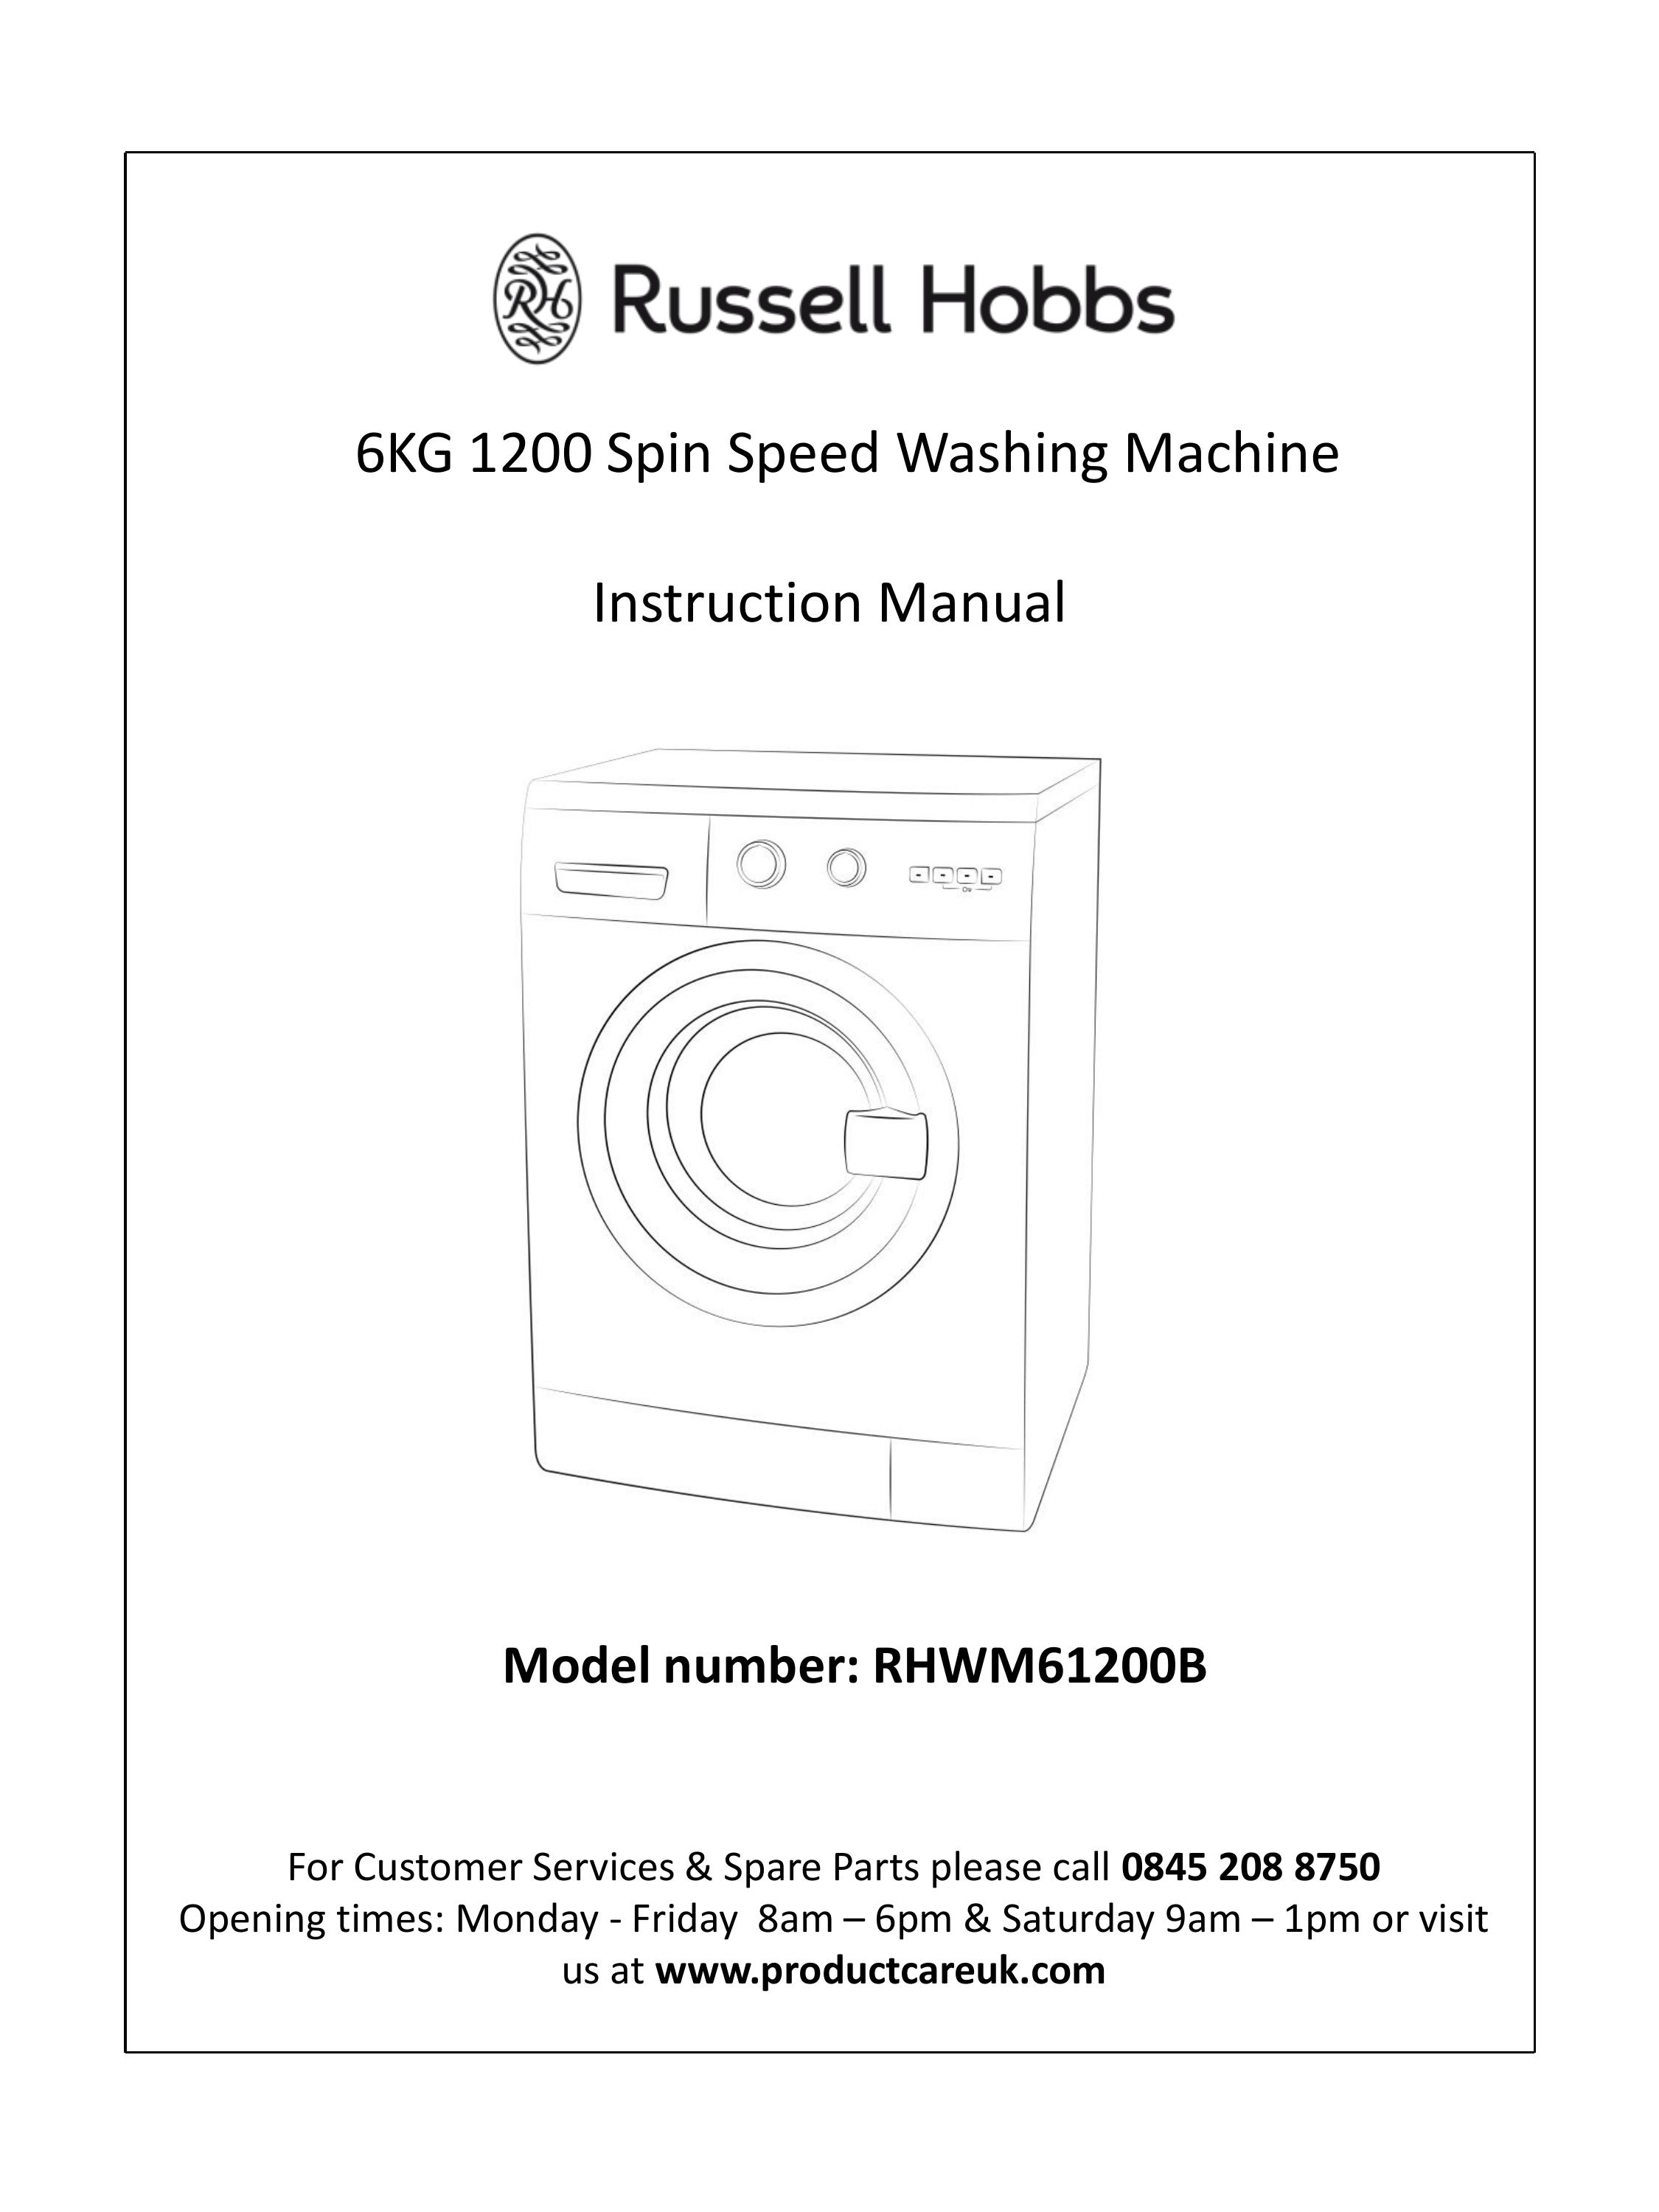 Russell Hobbs RHWM61200B Washer User Manual